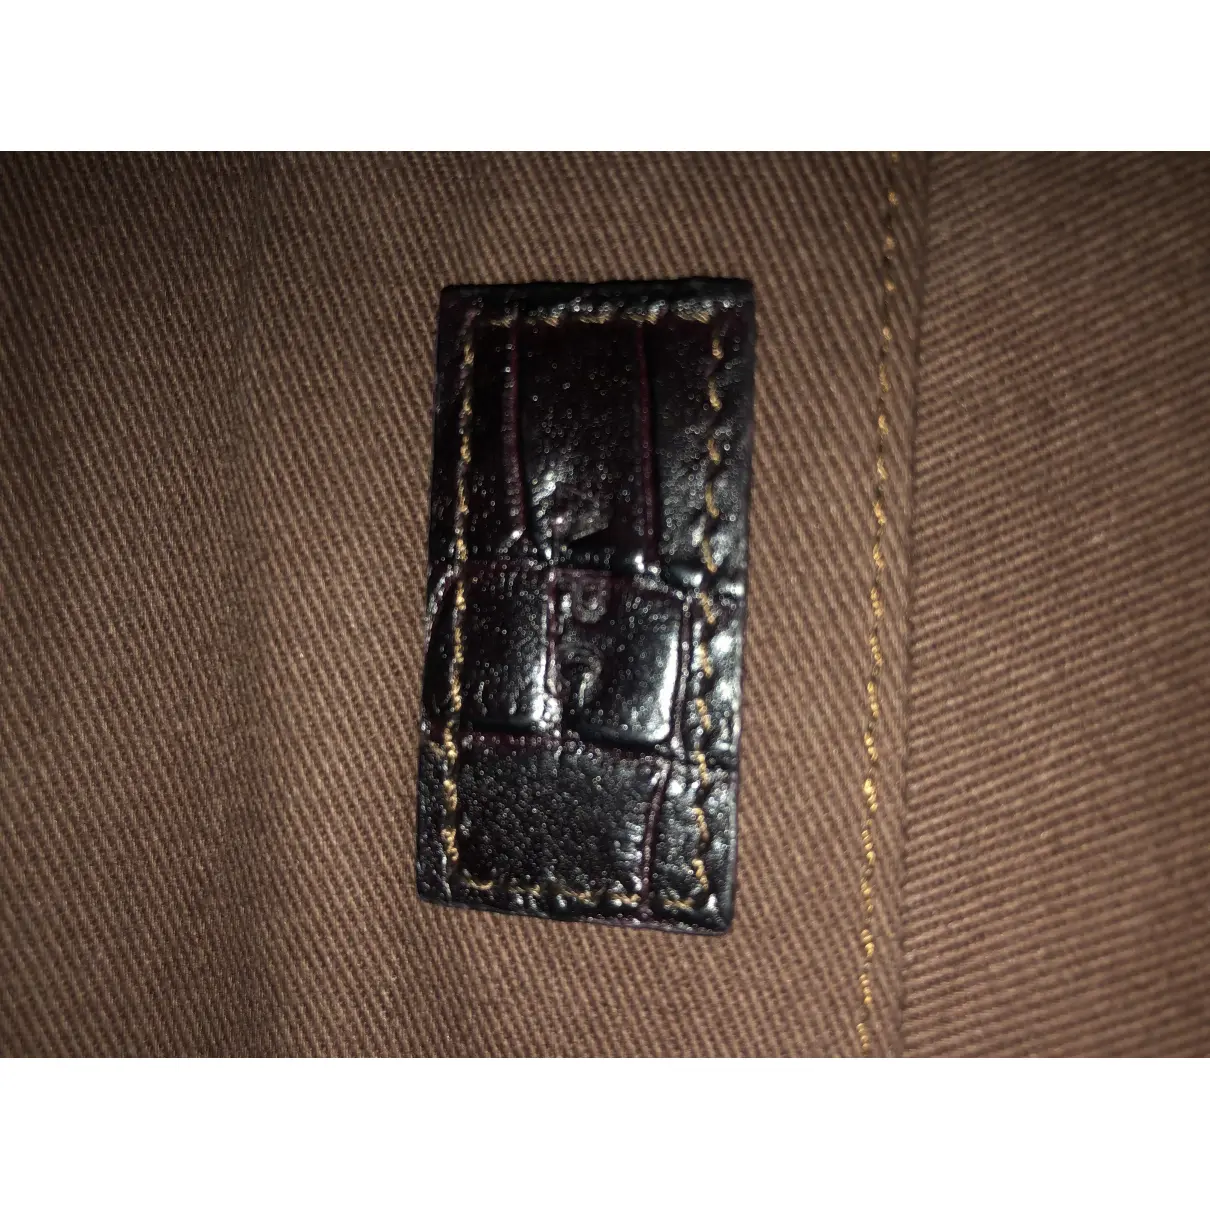 Demi-lune leather bag APC